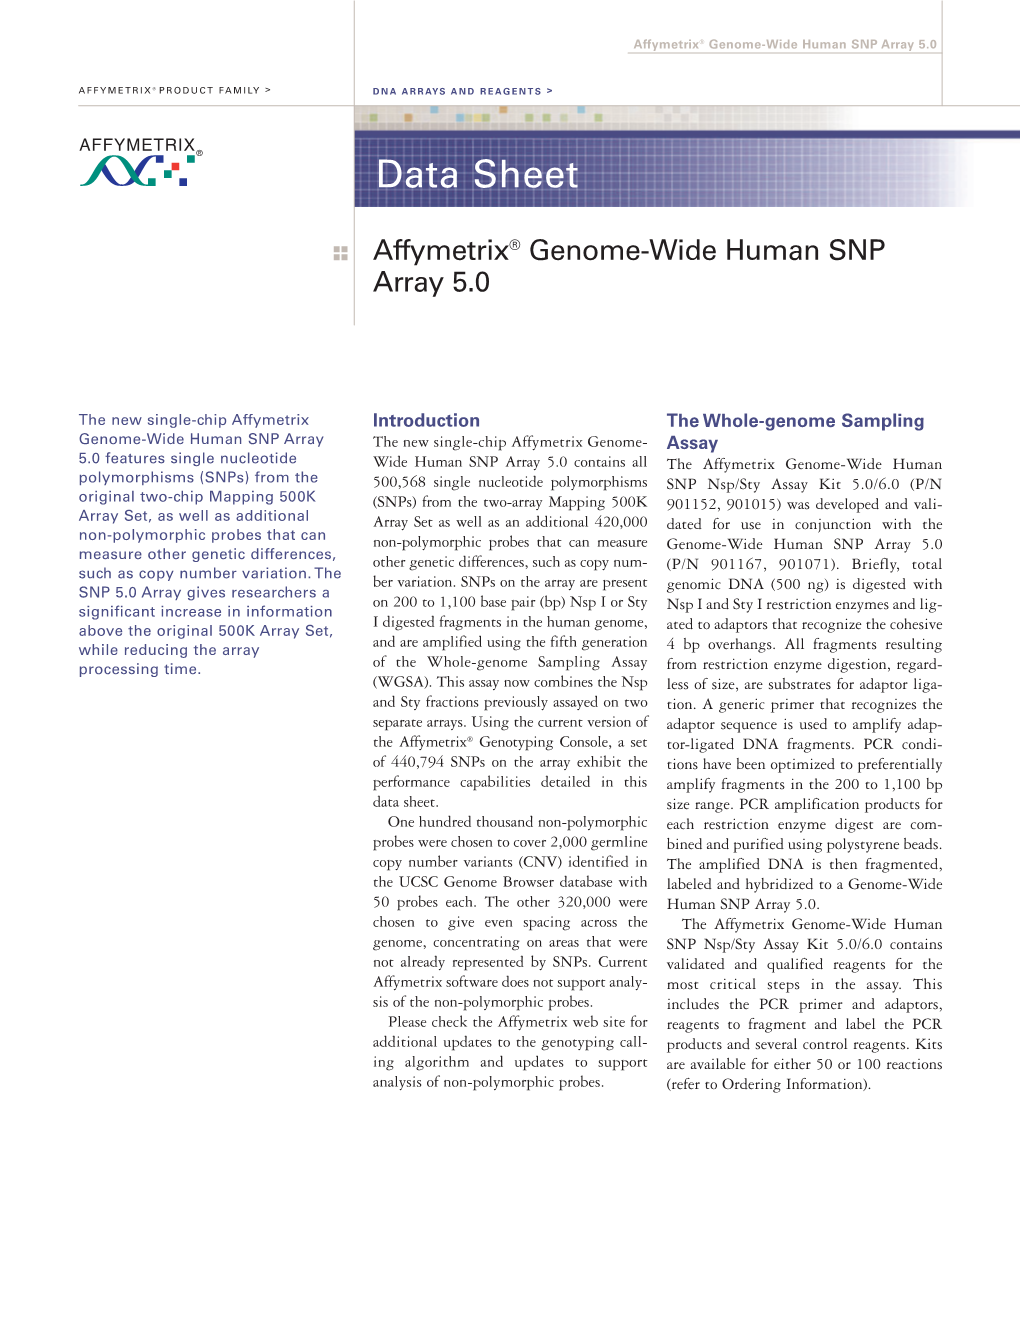 Genome-Wide Human SNP Array 5.0. Data Sheet